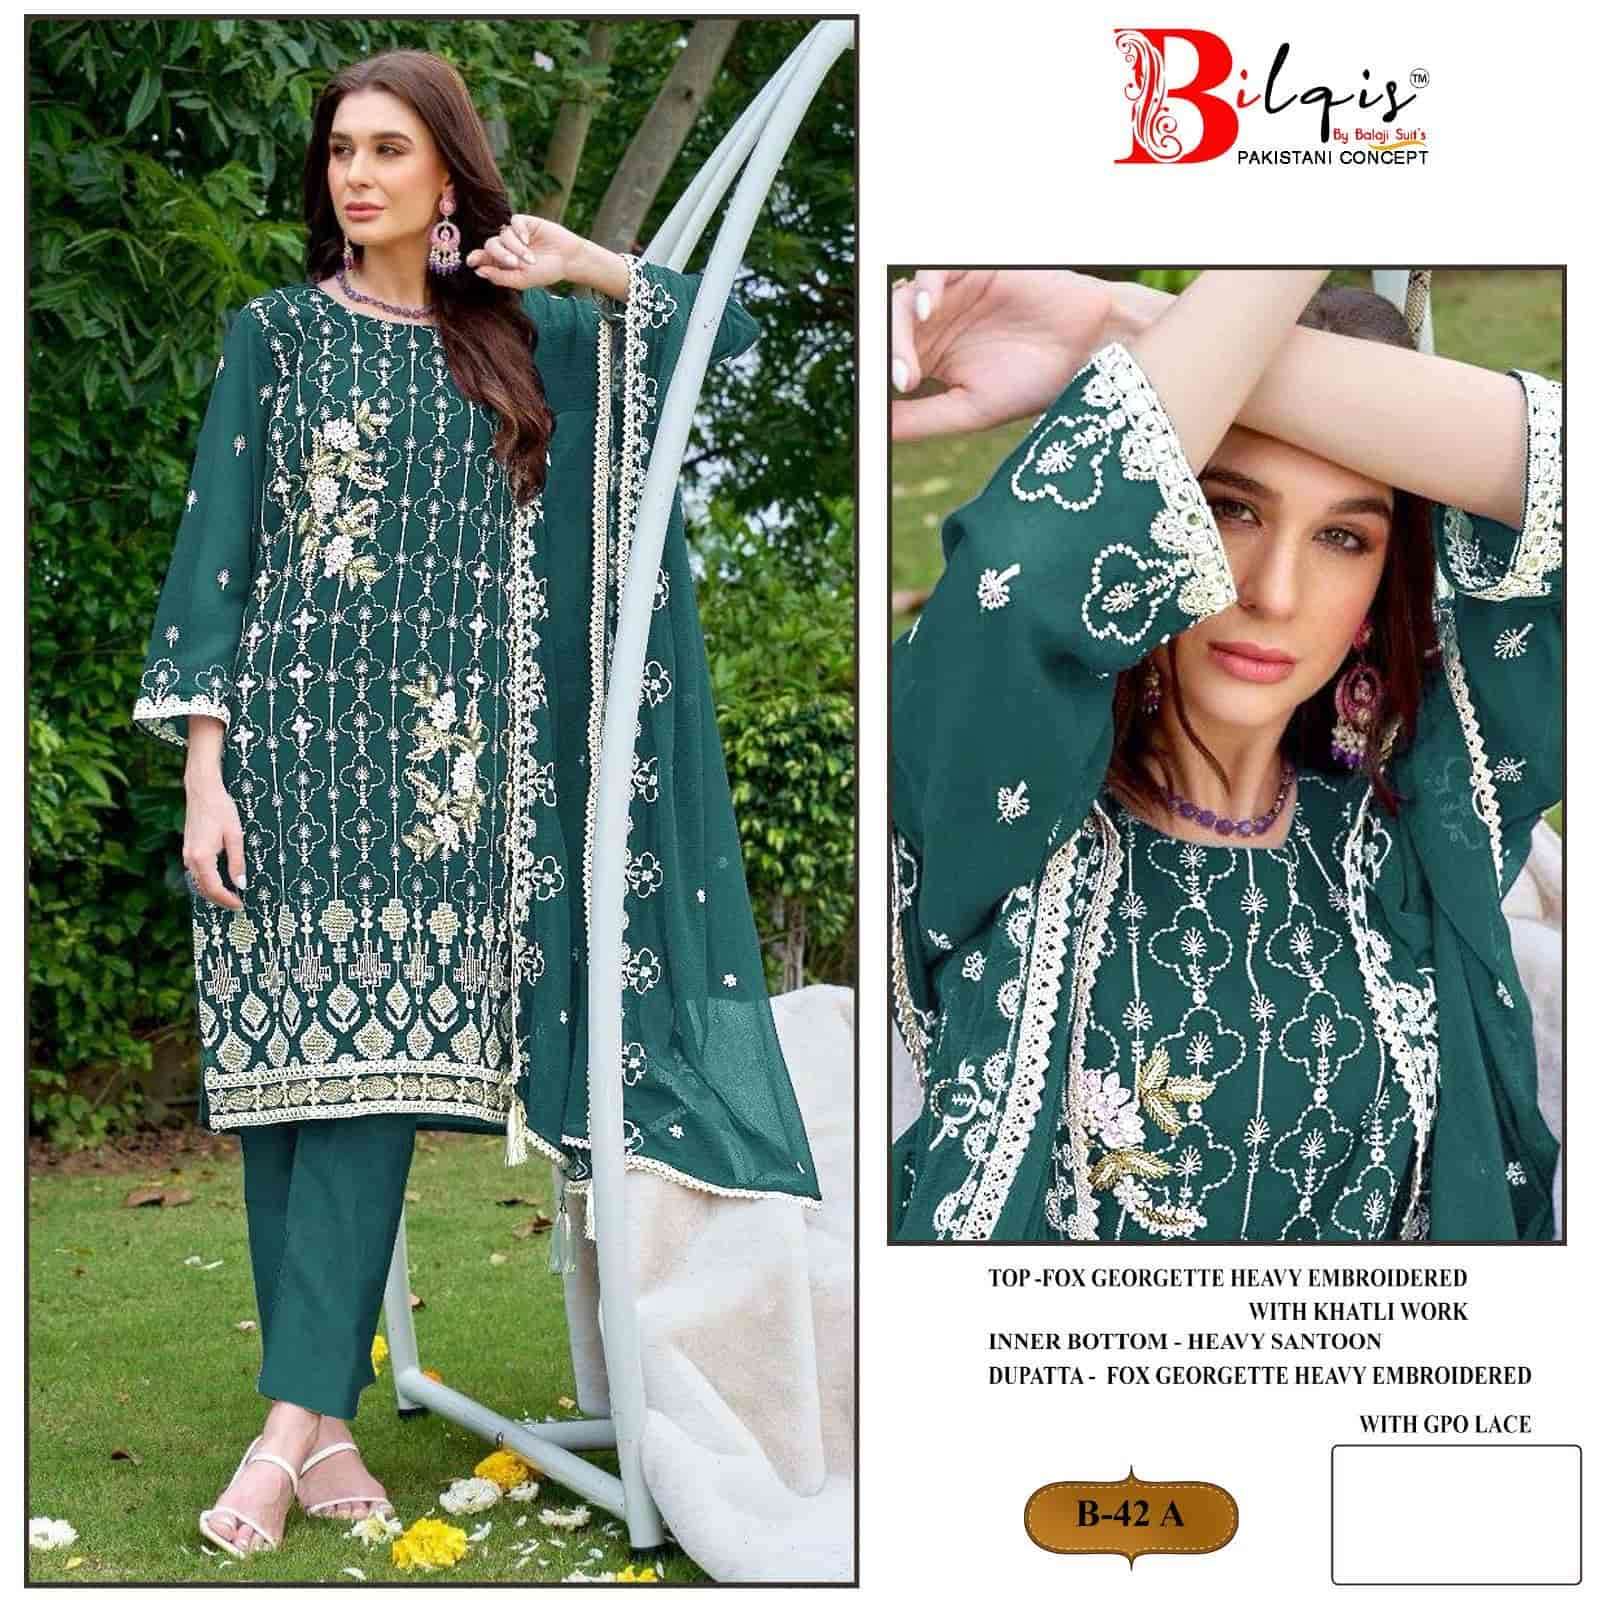 Bilqis B 42 Colors Heavy Designer Pakistani Dress New Collection